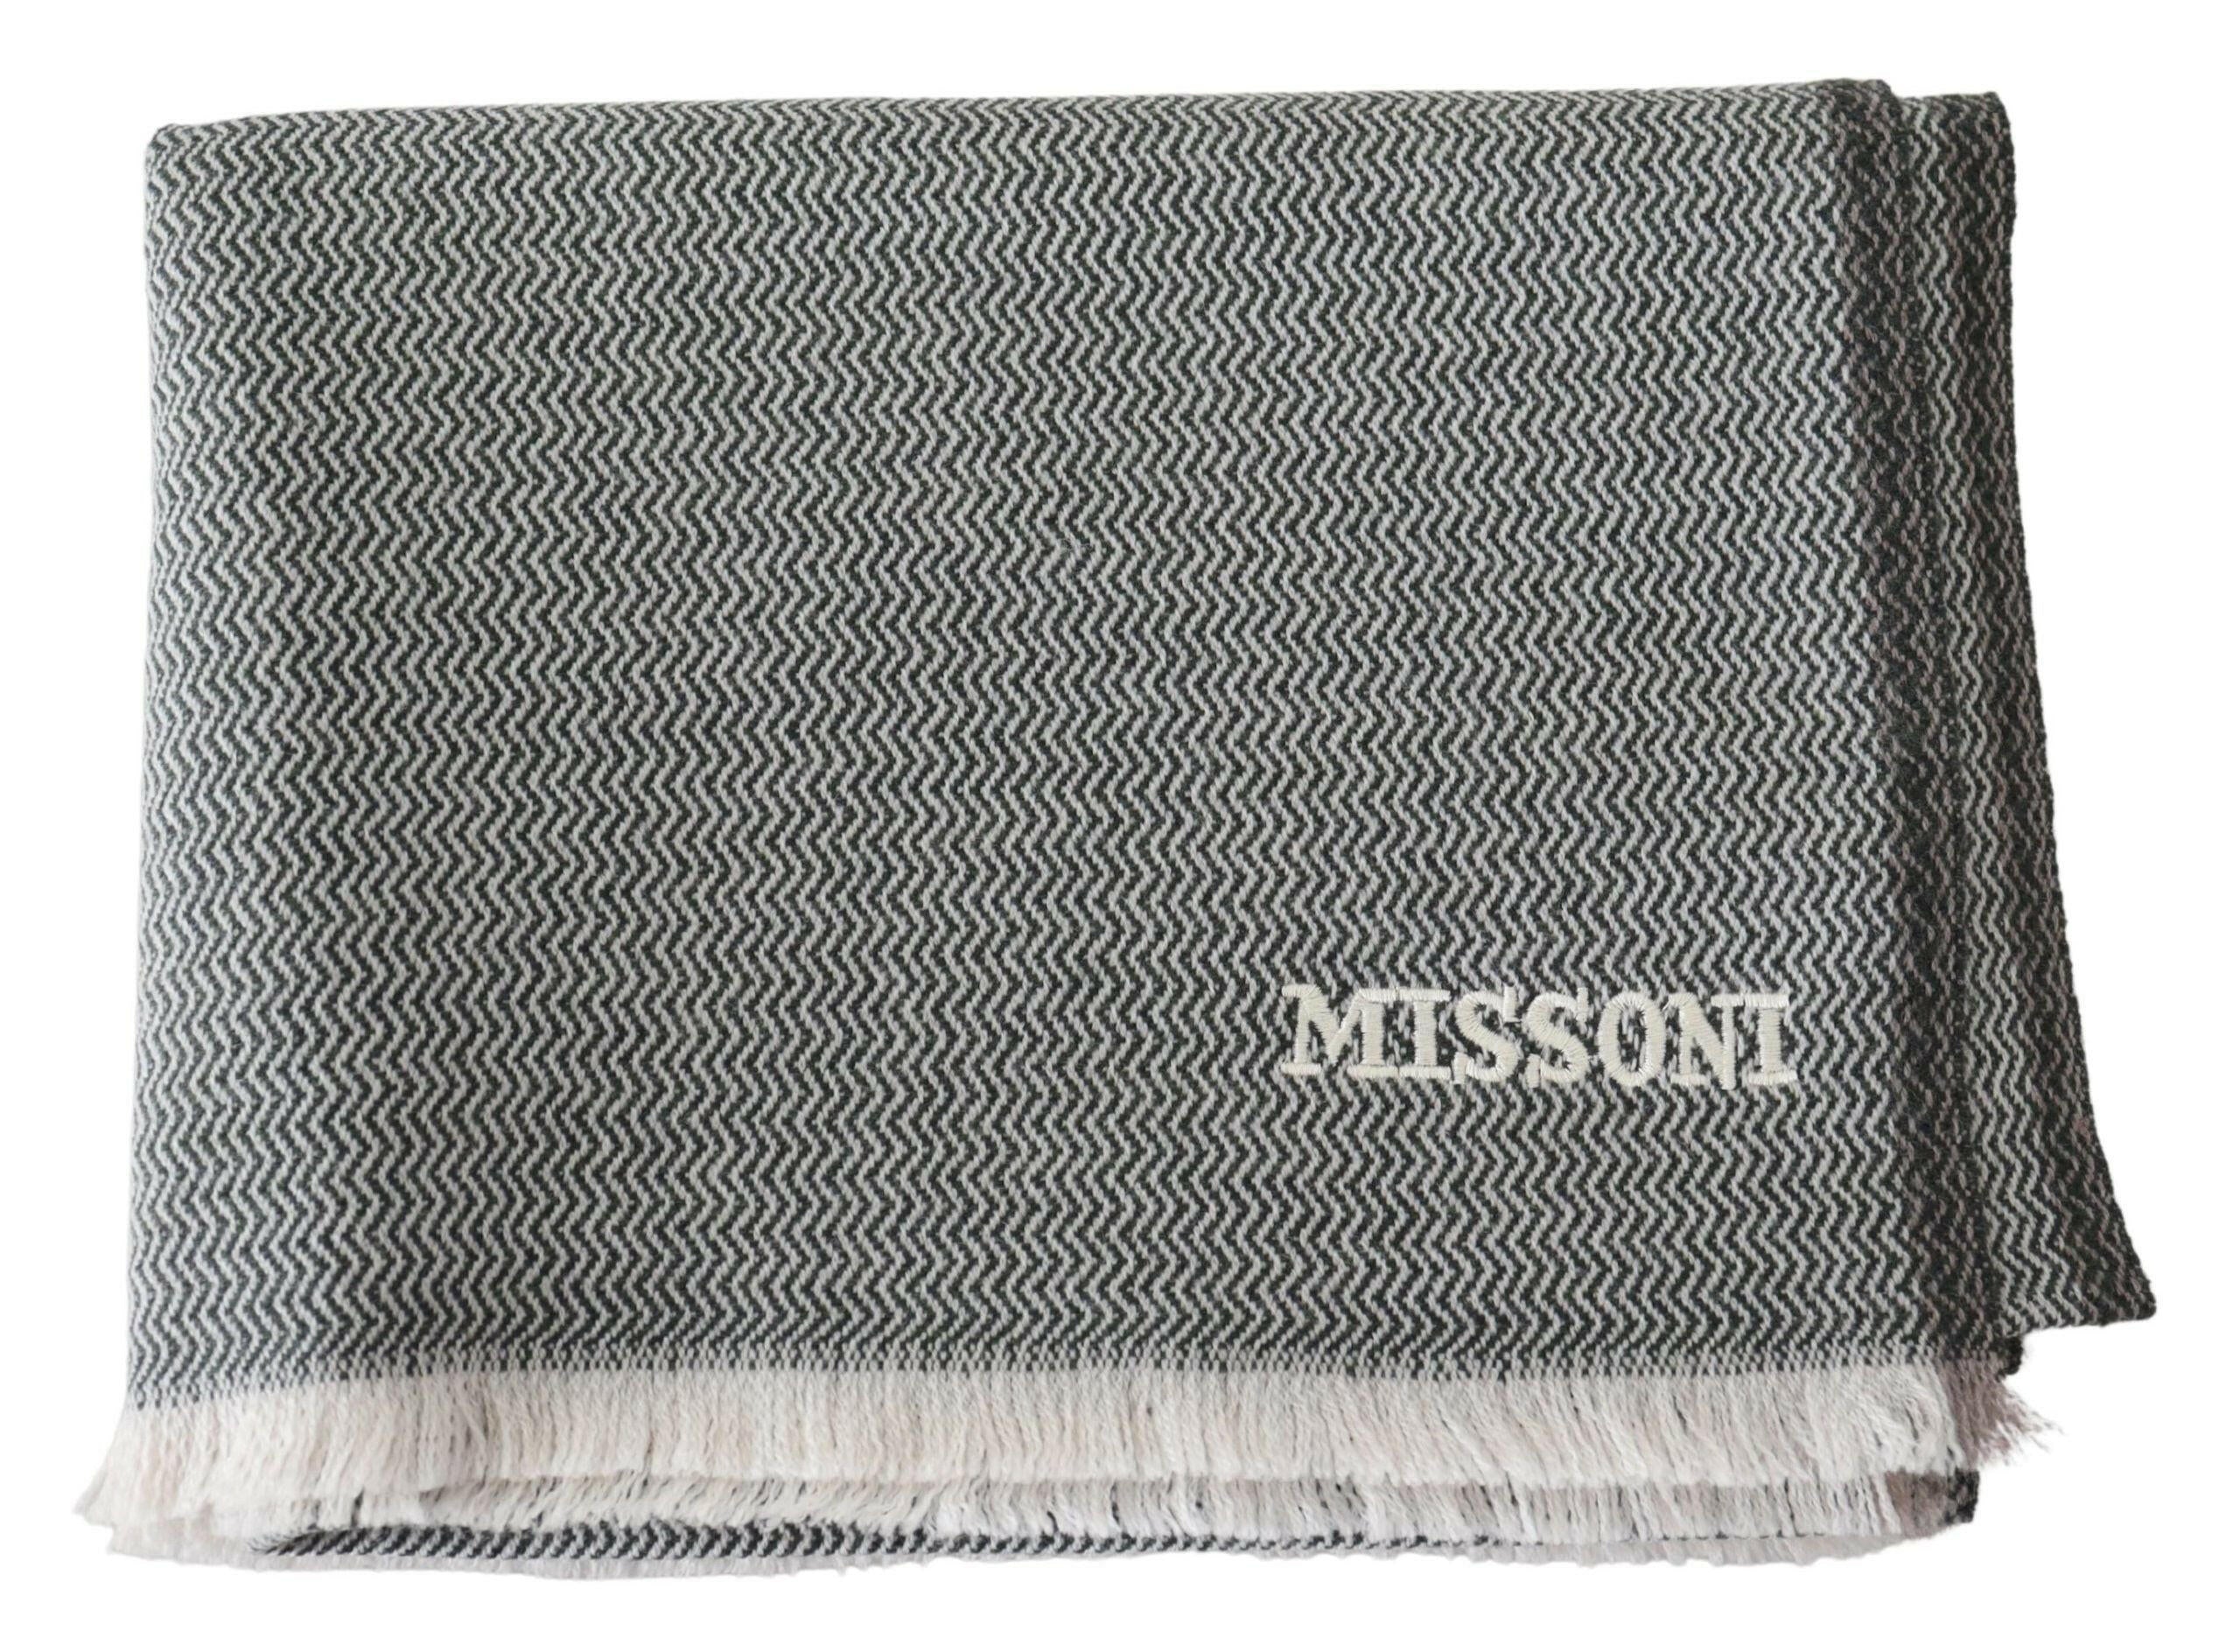 Missoni Gray Zigzag Pattern Cashmere Unisex Neck Scarf - GENUINE AUTHENTIC BRAND LLC  